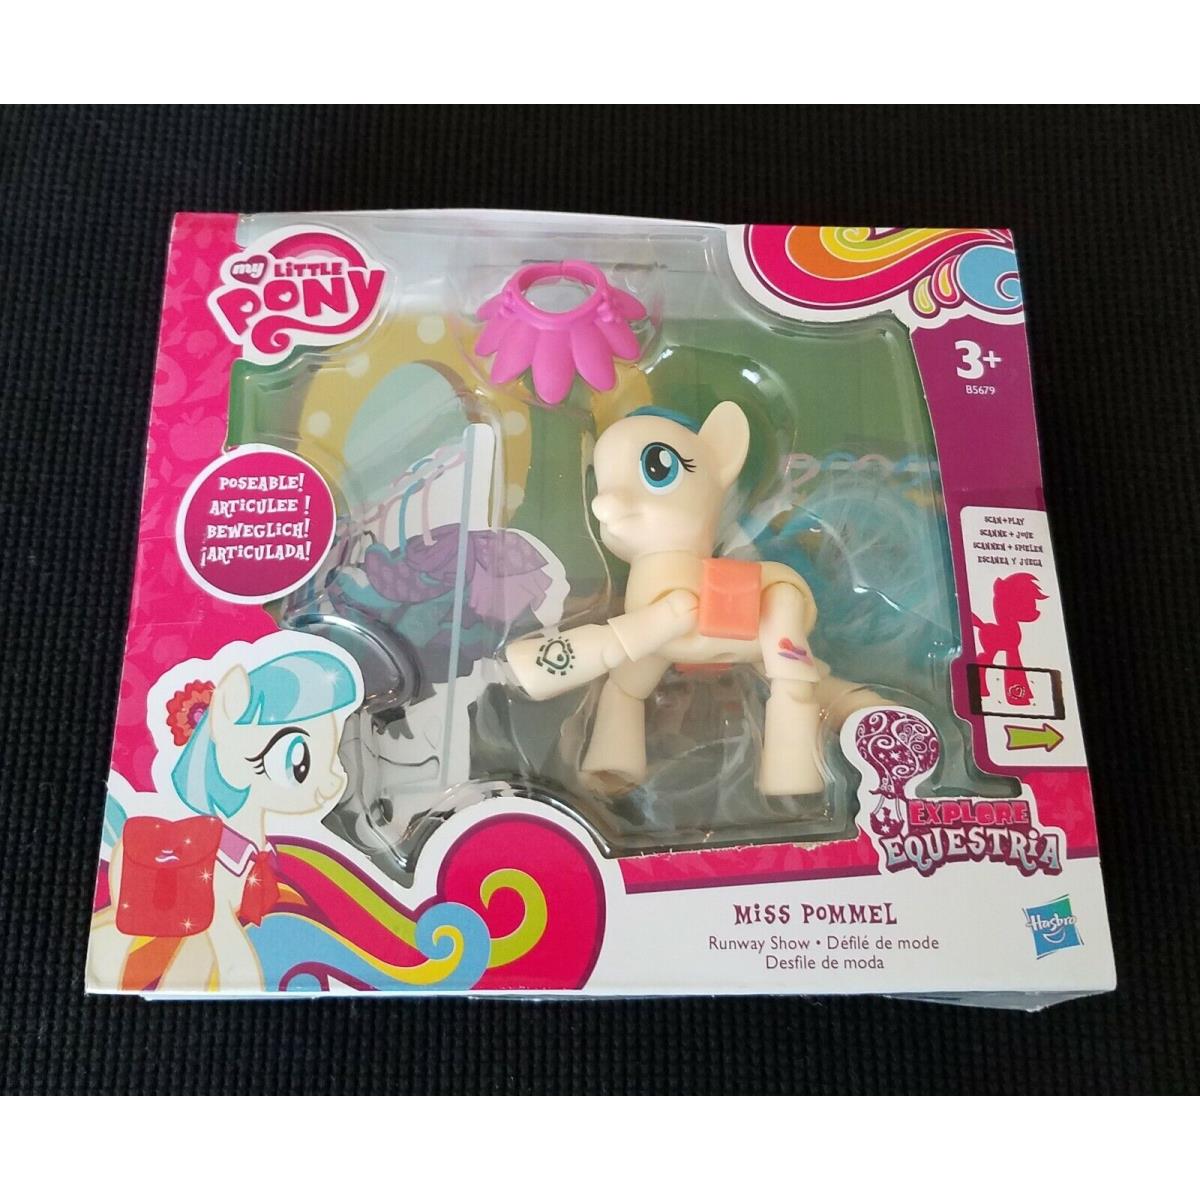 2015 My Little Pony Explore Equestria Princess Twilight Sparkle Hasbro